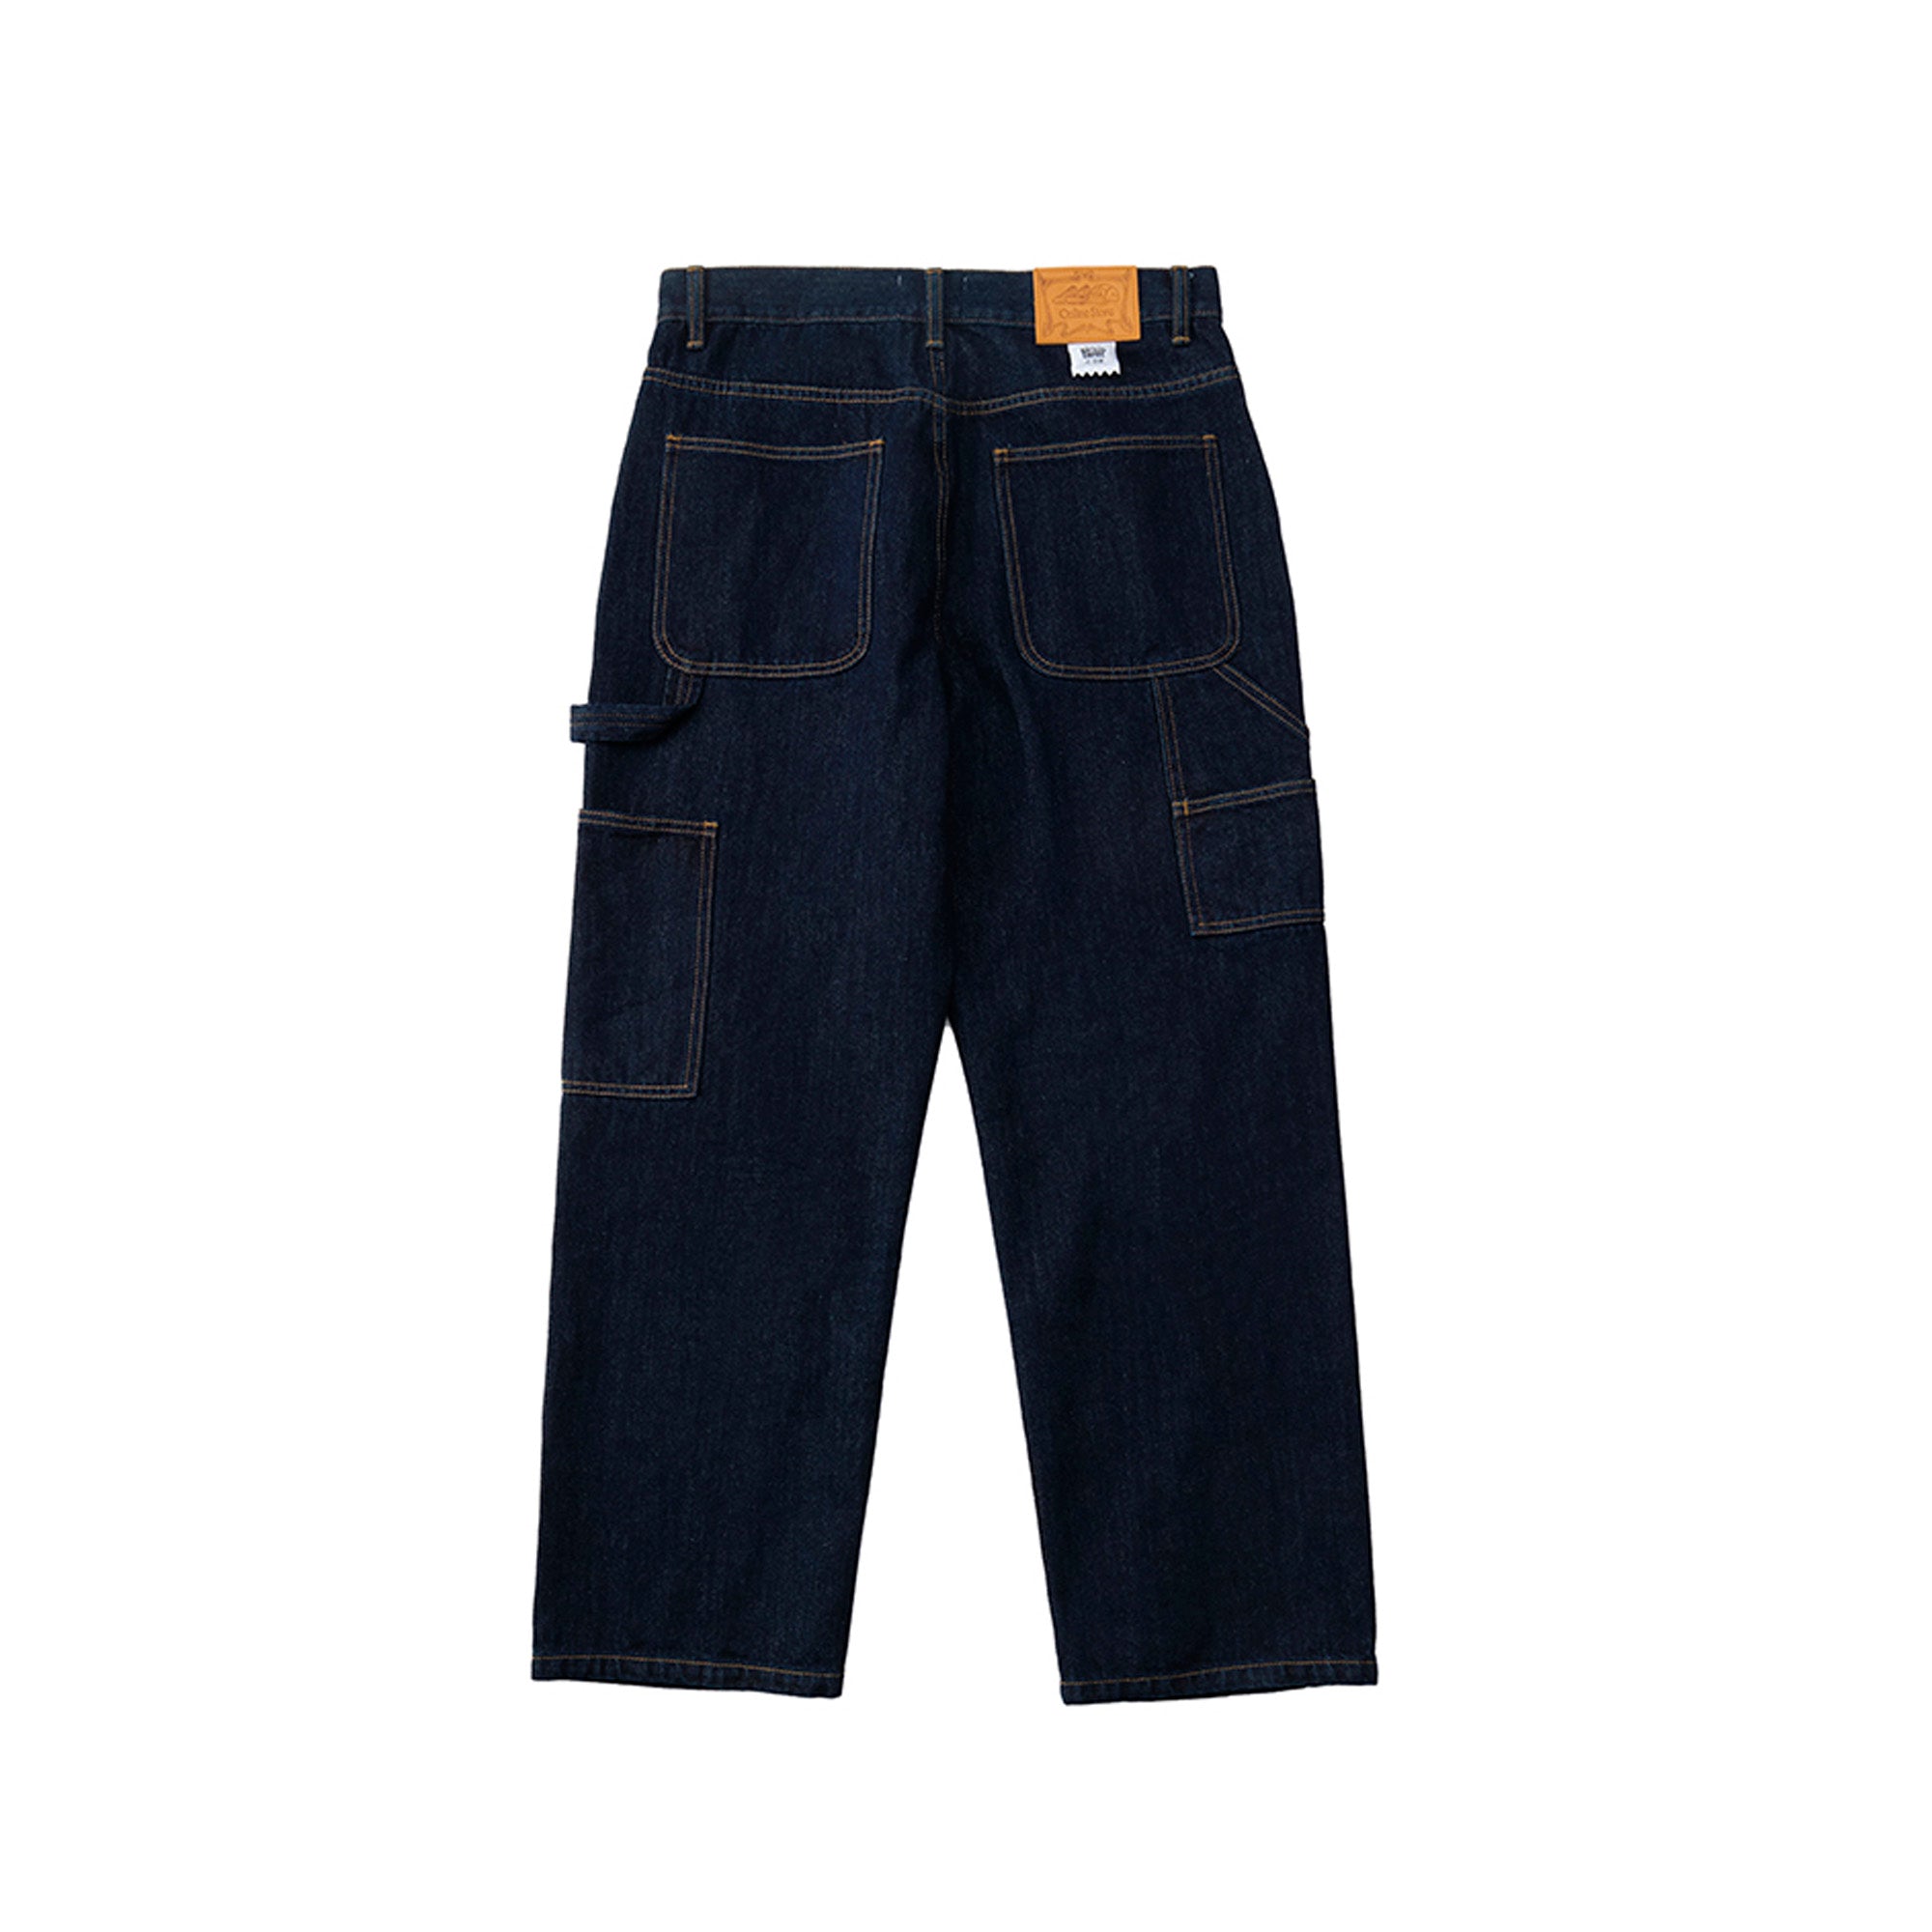 Carpenters Workwear Jeans